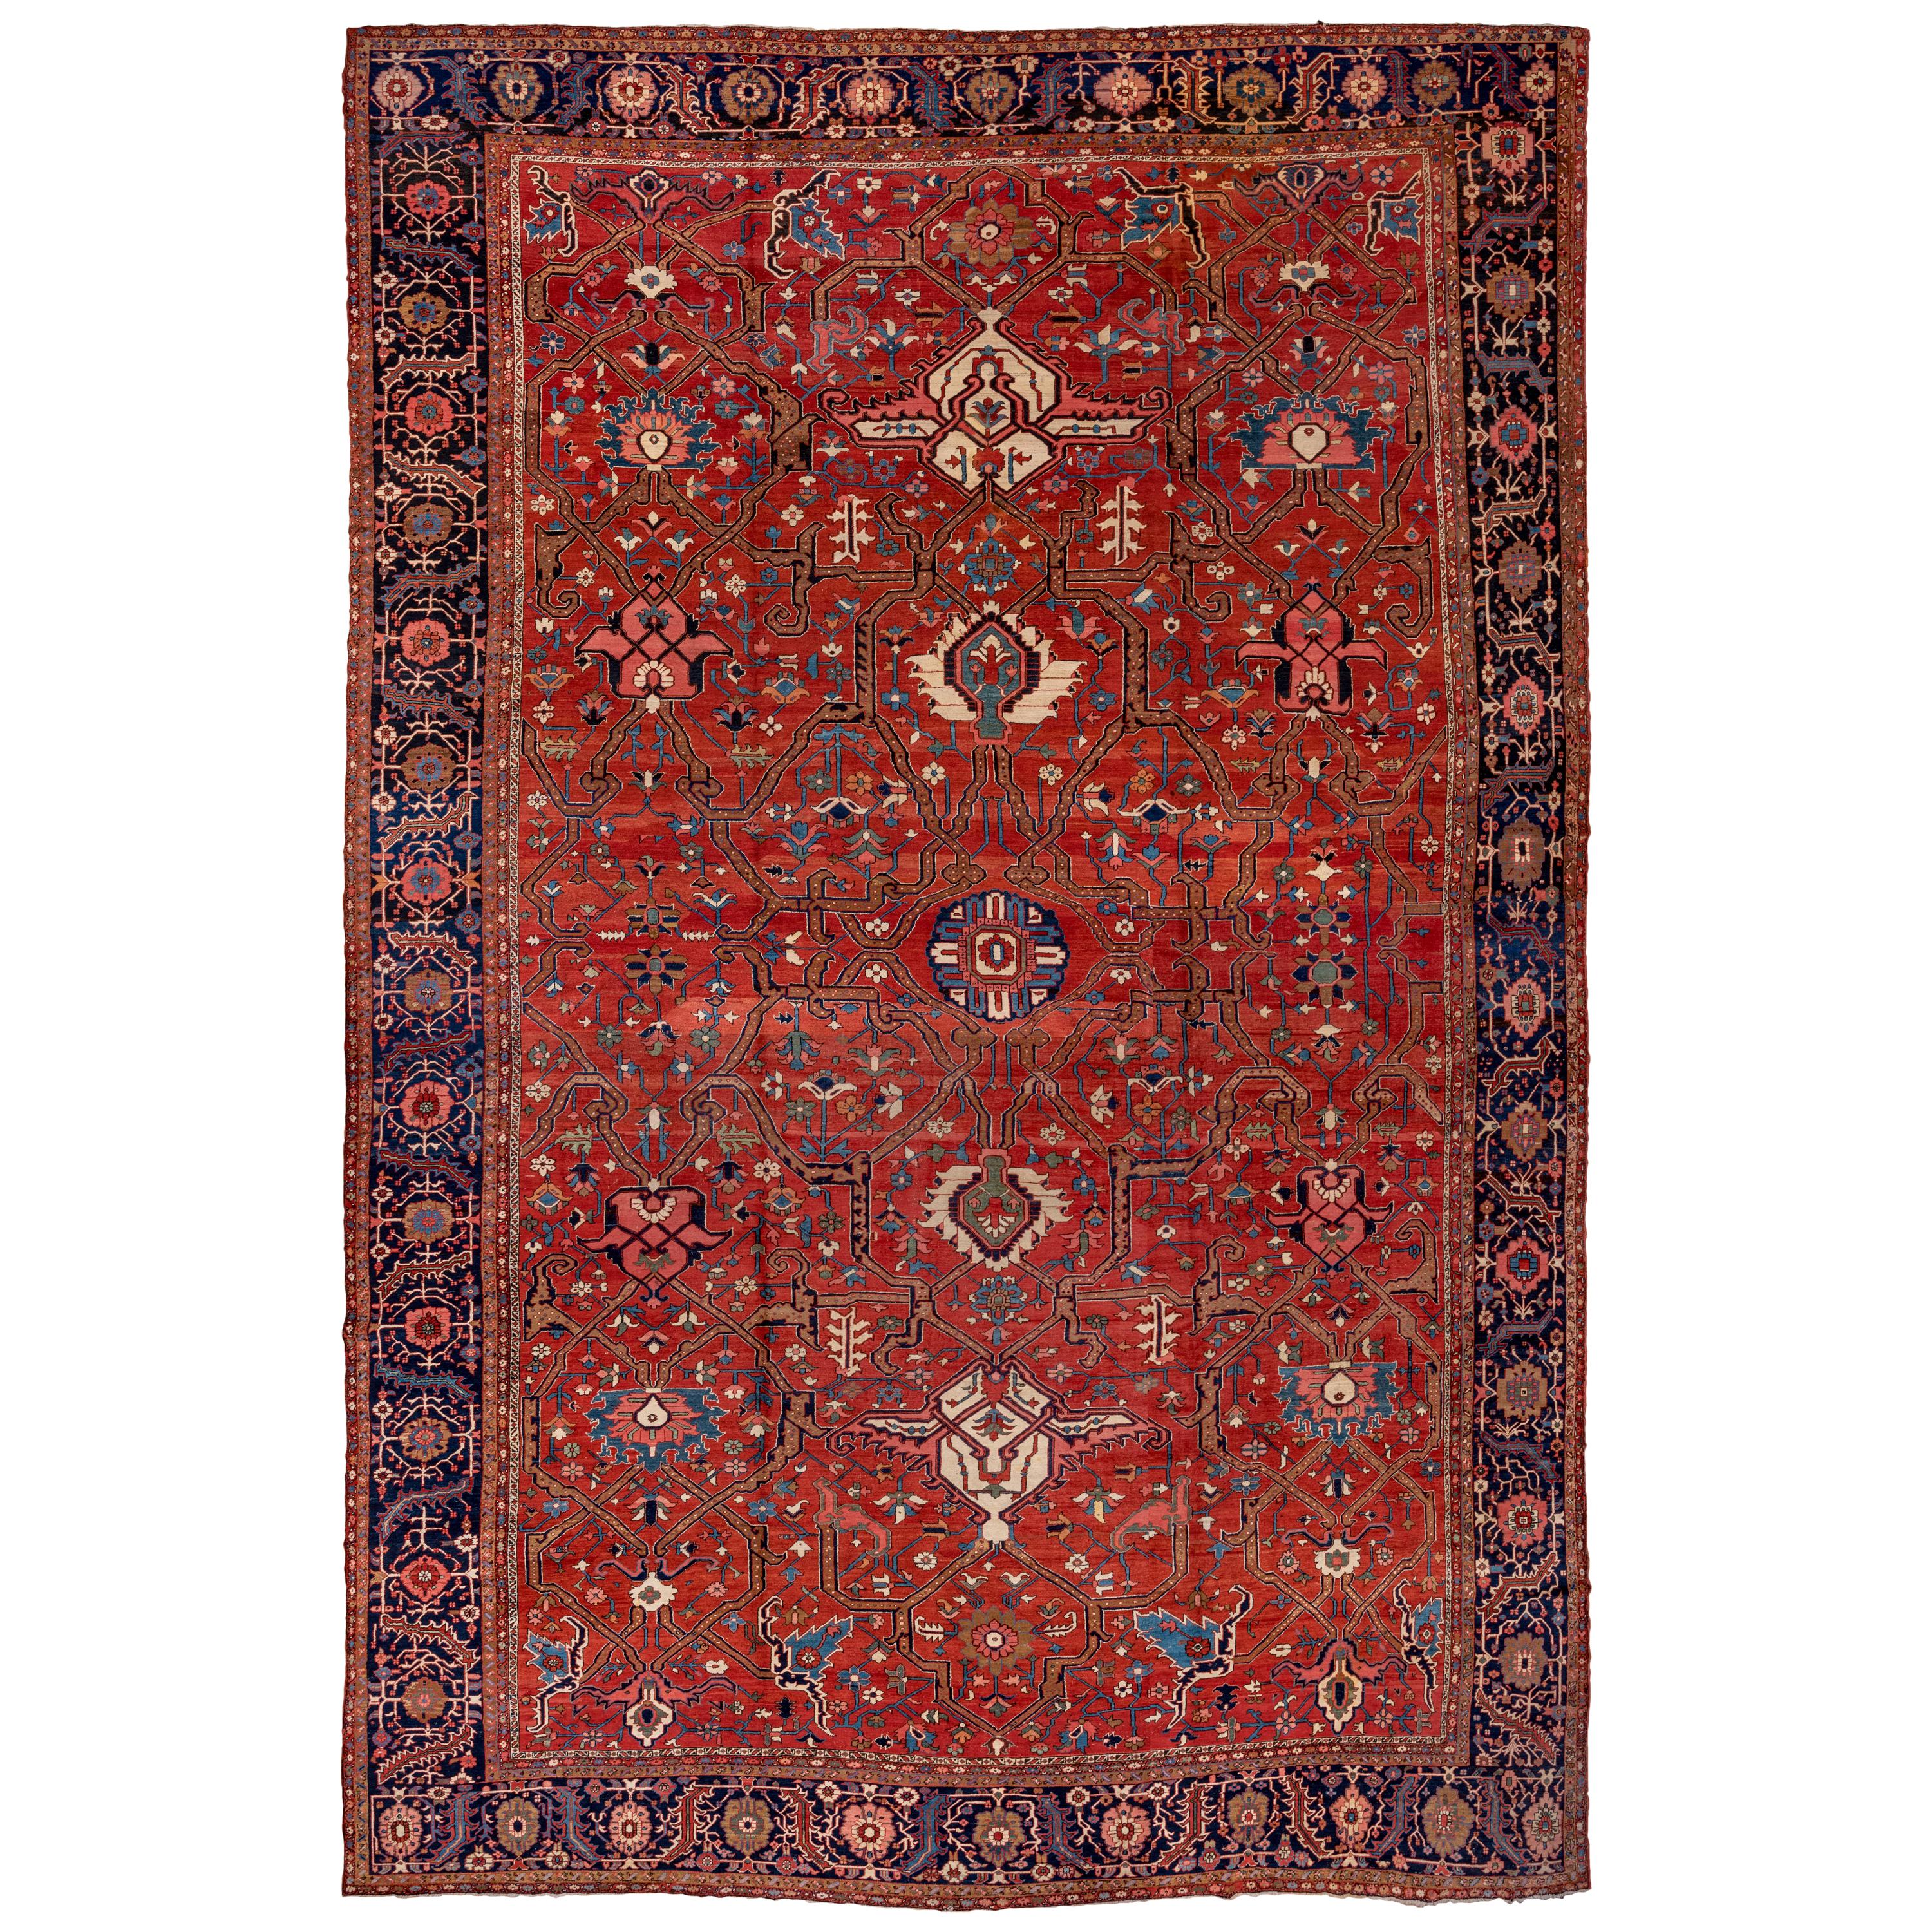 Oversized Antique Heriz Serapi Carpet, Excellent Condition